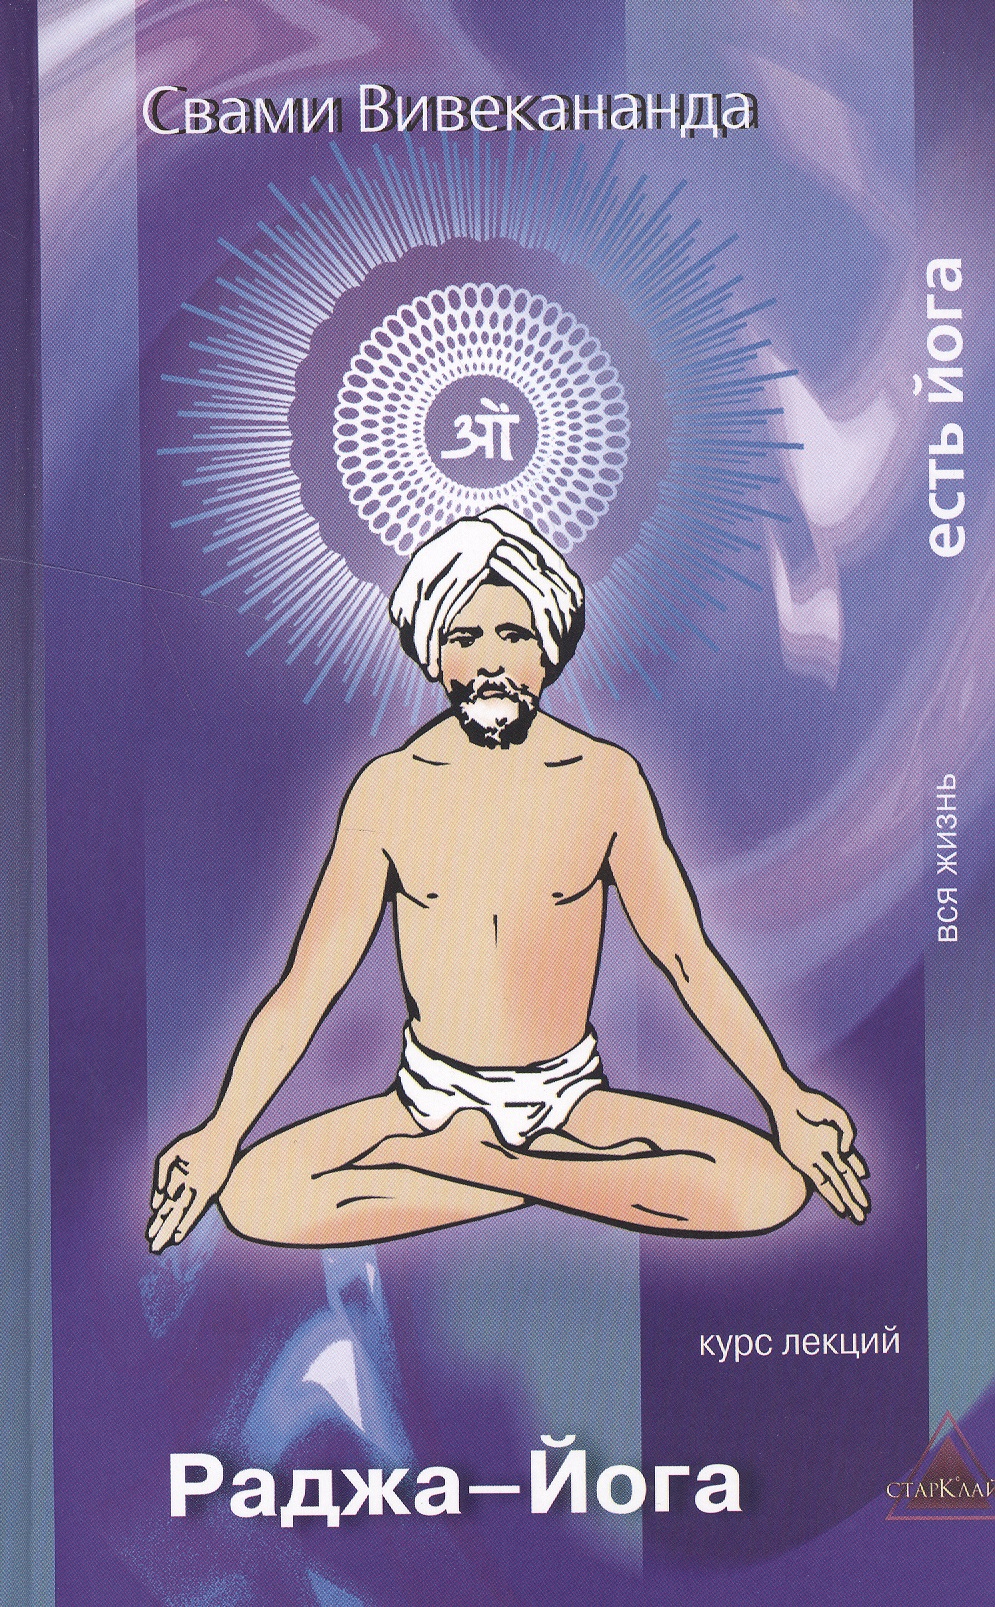 вивекананда свами карма йога практическая веданта 3 е изд Свами Вивекананда Раджа-Йога Курс лекций (ВЖЕЙ) Вивекананда